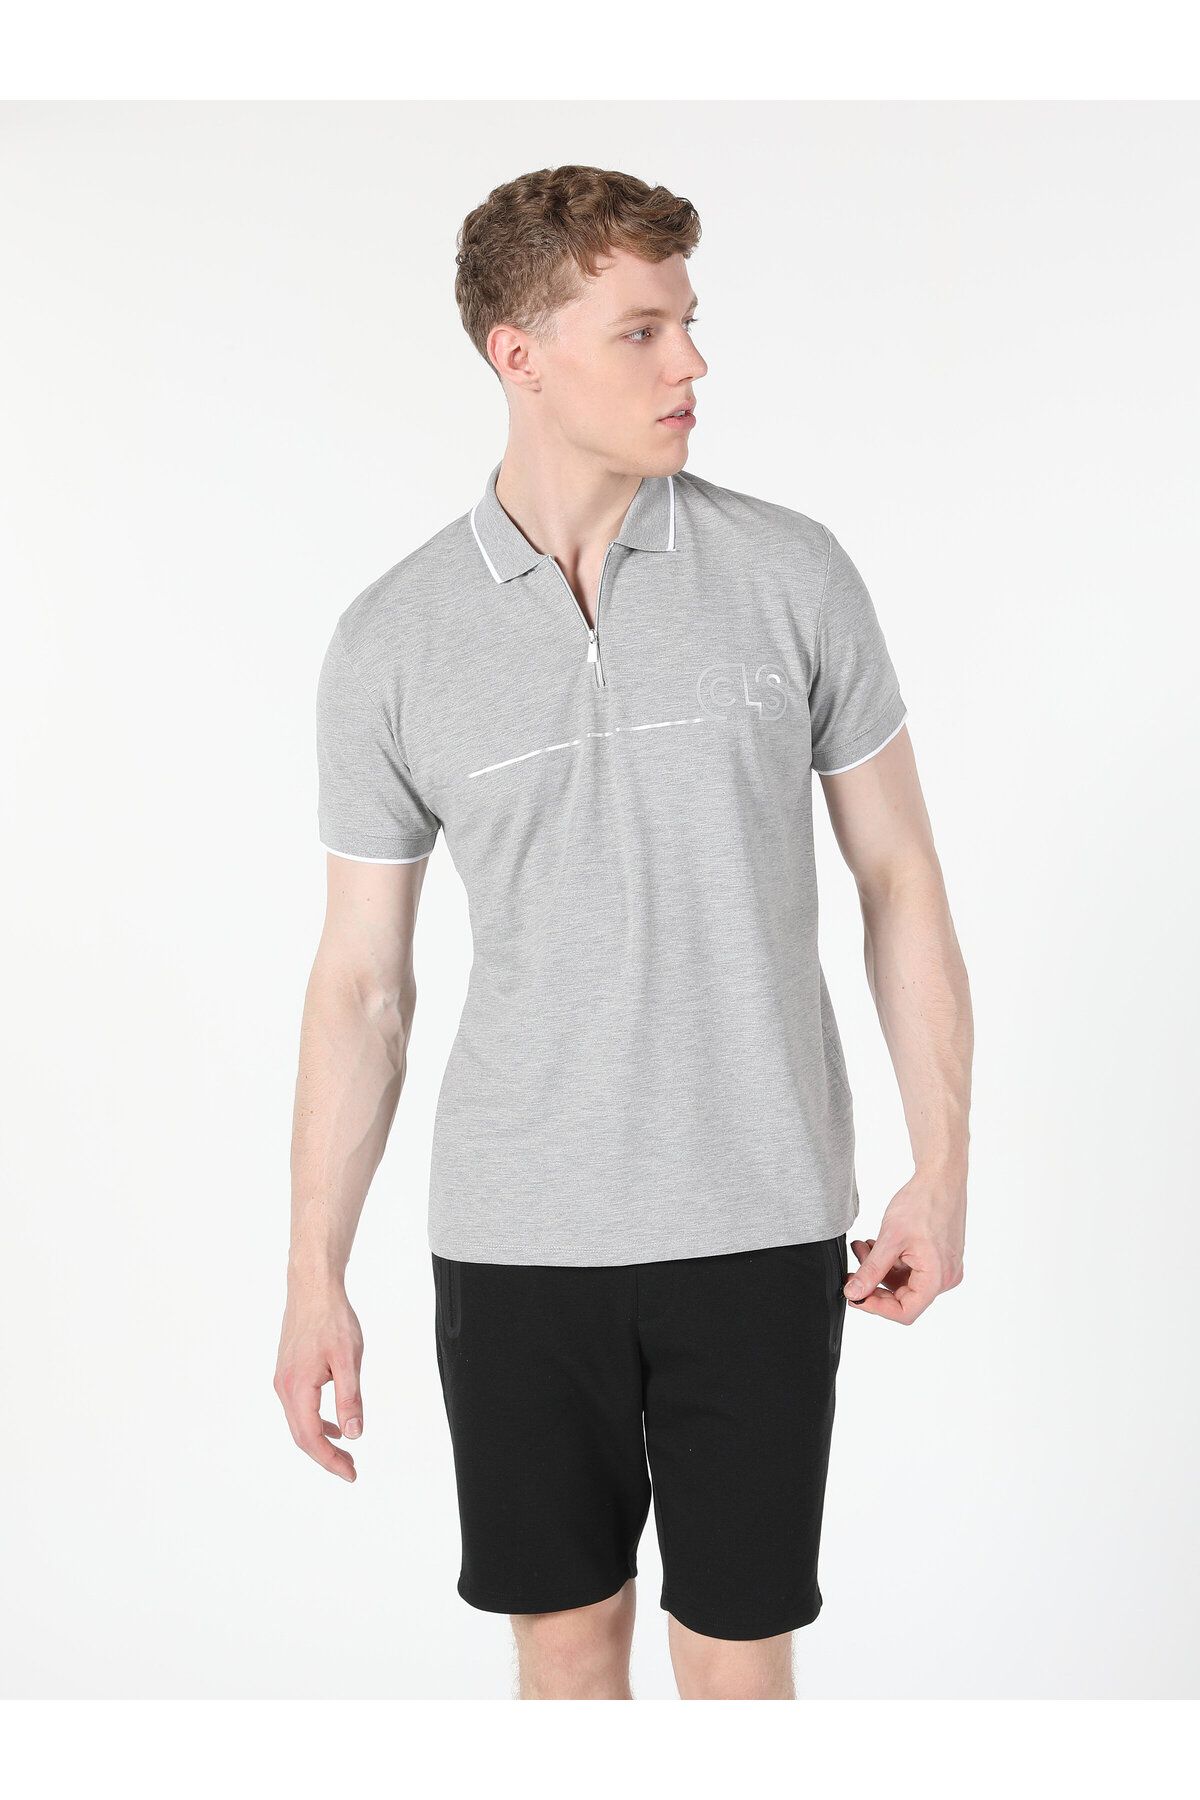 Colin’s تی شرت آستین کوتاه مردانه با زیپ یقه چوگان تناسب معمولی